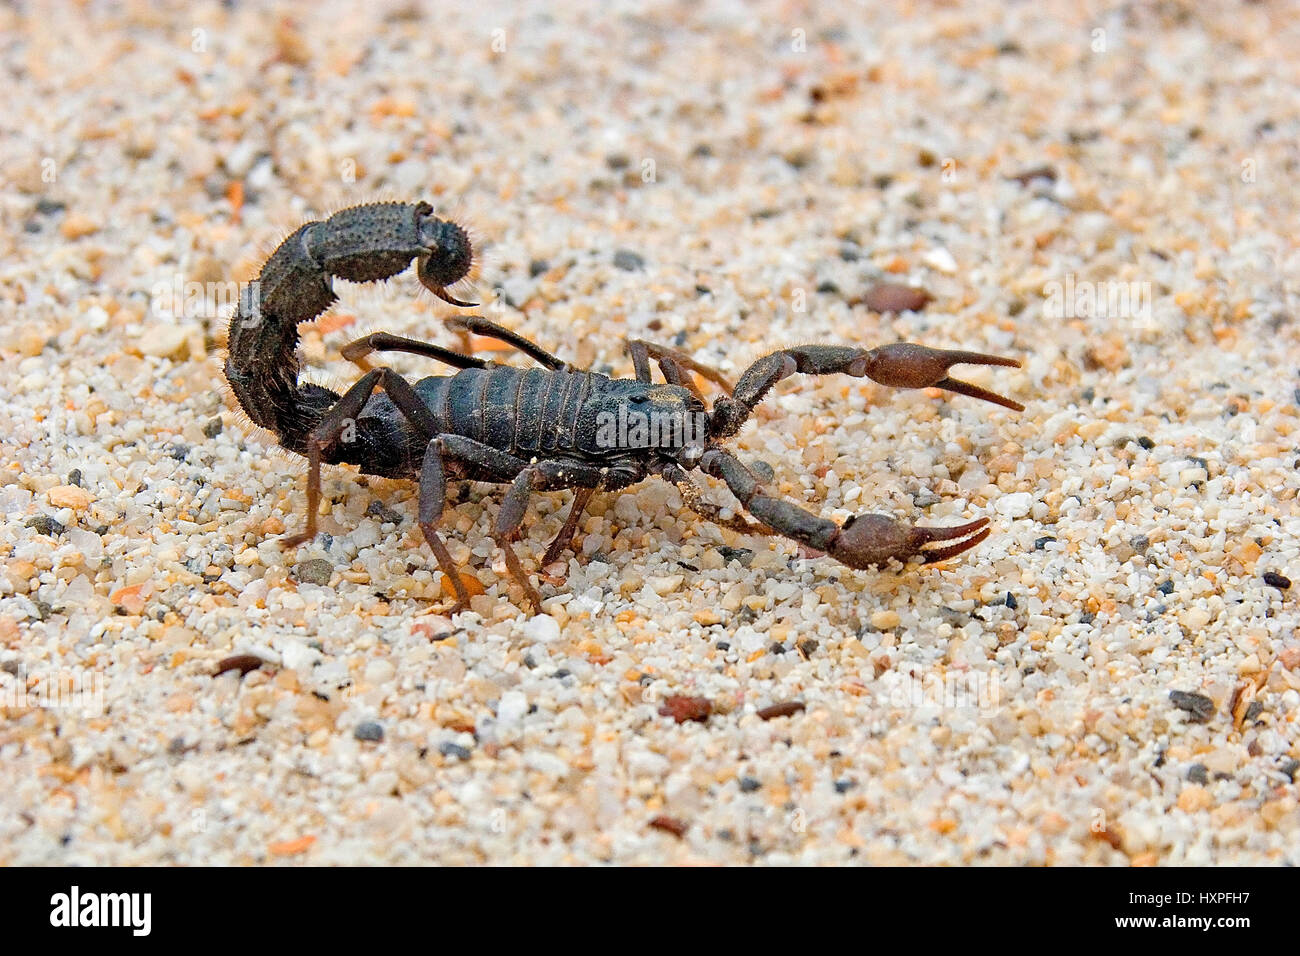 Hairy Dick's tail, P. villosus, Haariger Dickschwanz | P. villosus  ein giftiger Skorpion  Namibia Stock Photo